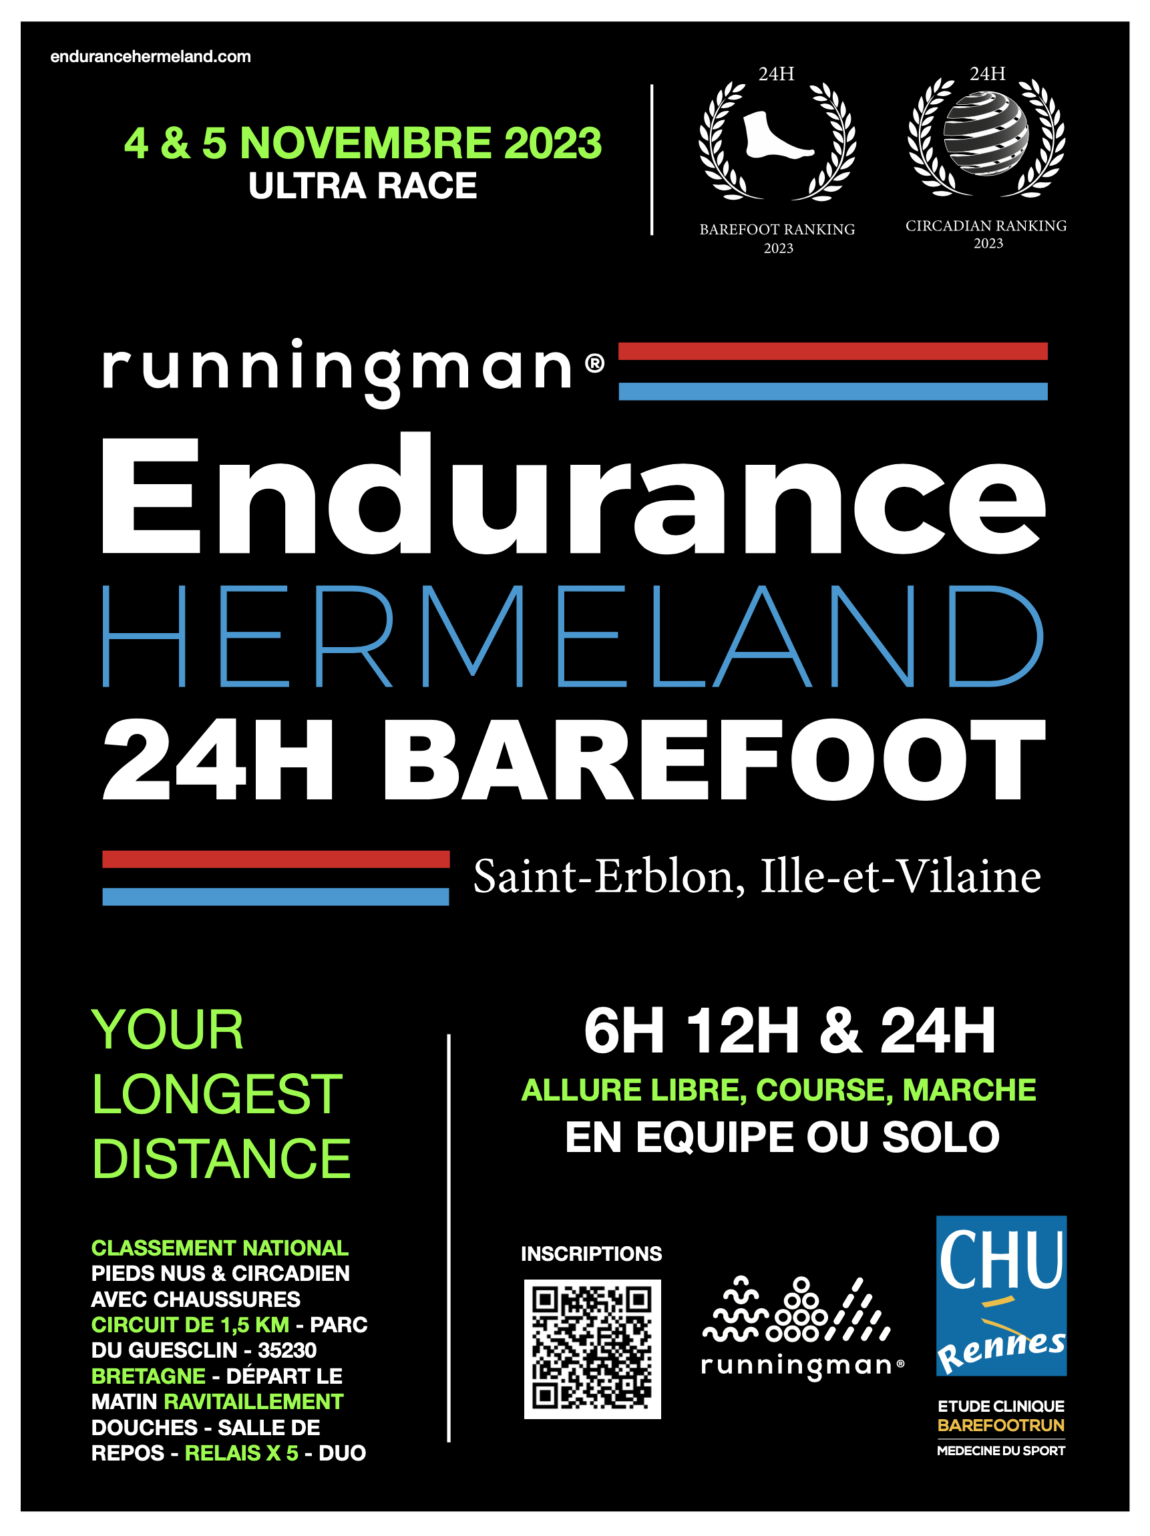 Endurance-Hermeland-1.1-1150x1536.png